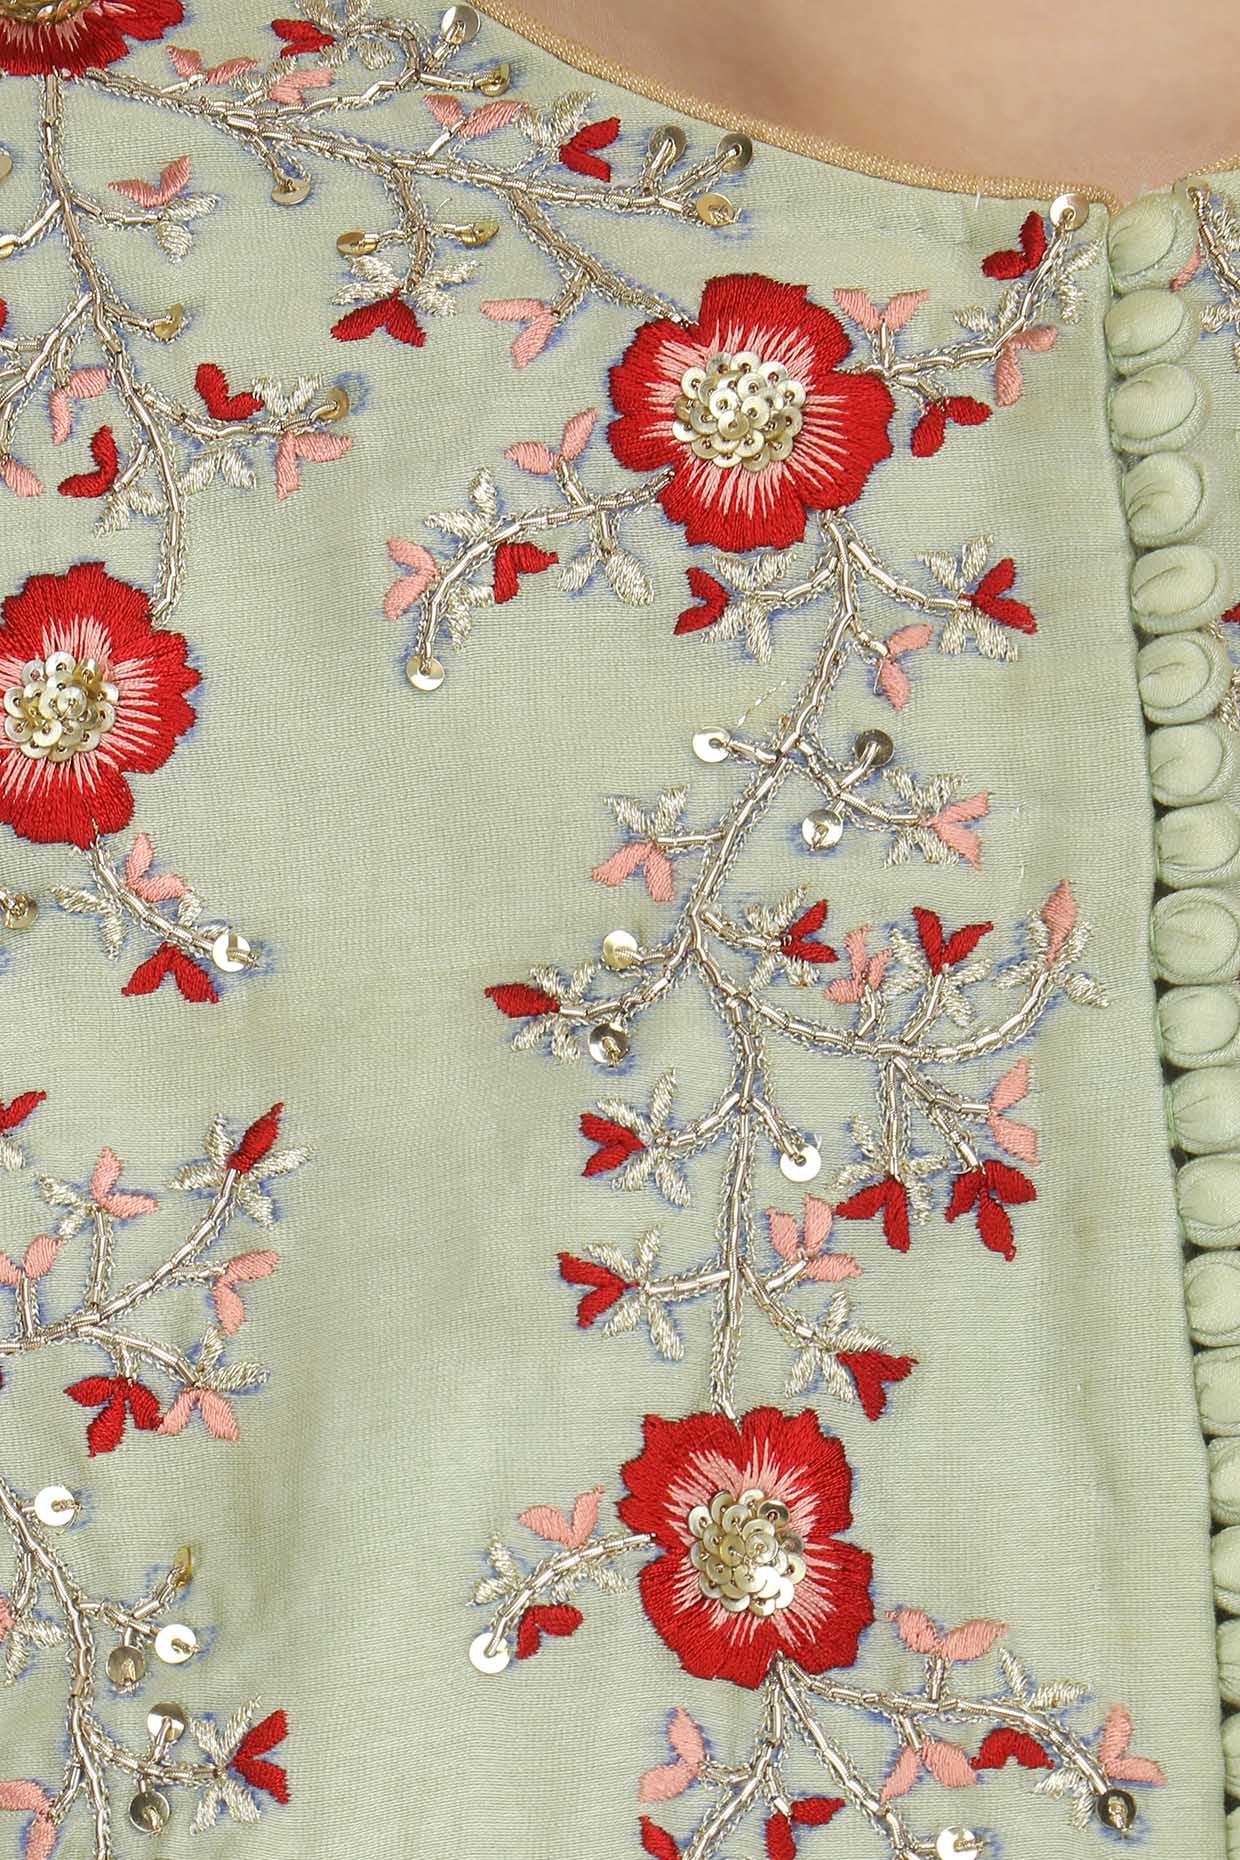 Red & Silver Zardosi Work Design on Off White - Hand Embroidery Kurti